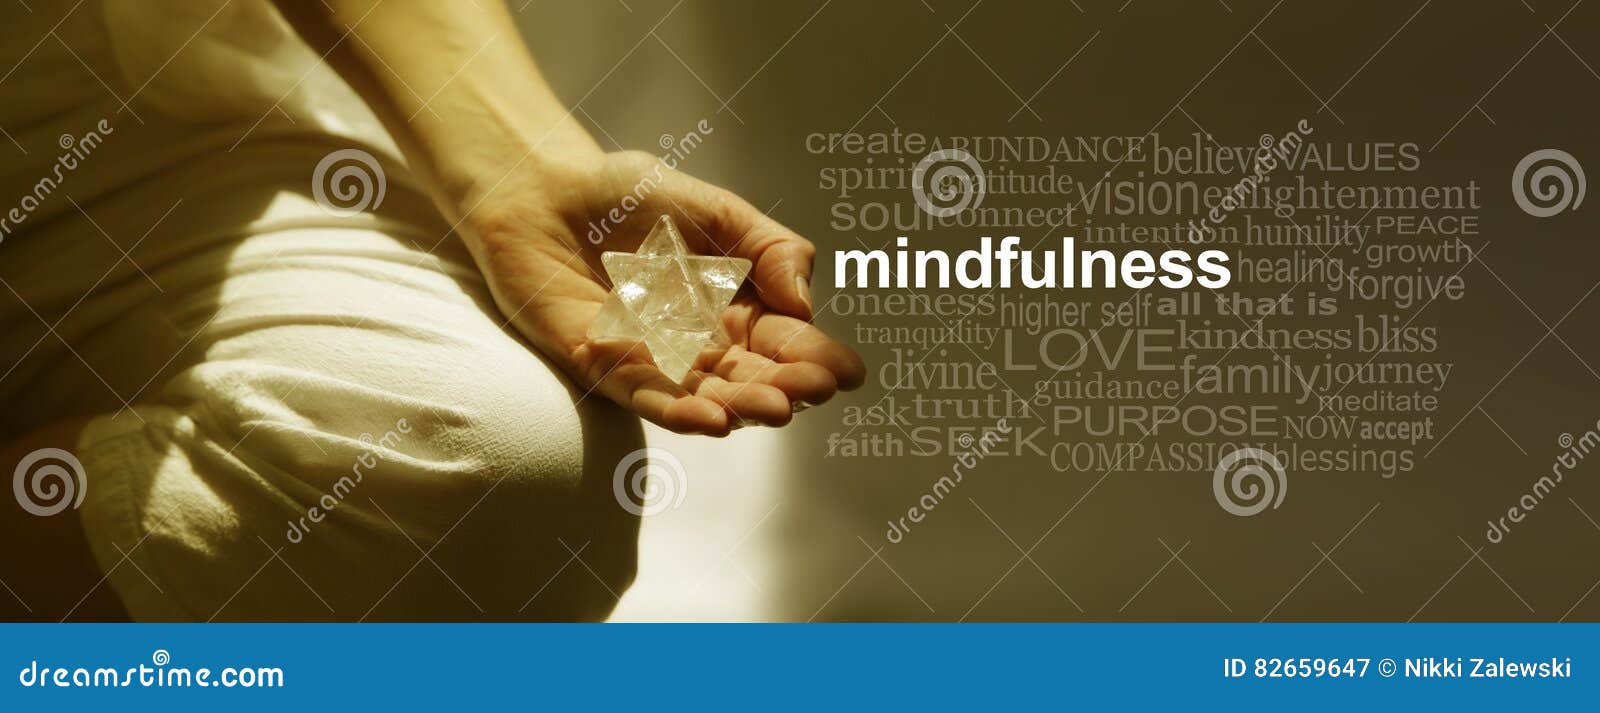 mindfulness meditation word cloud banner